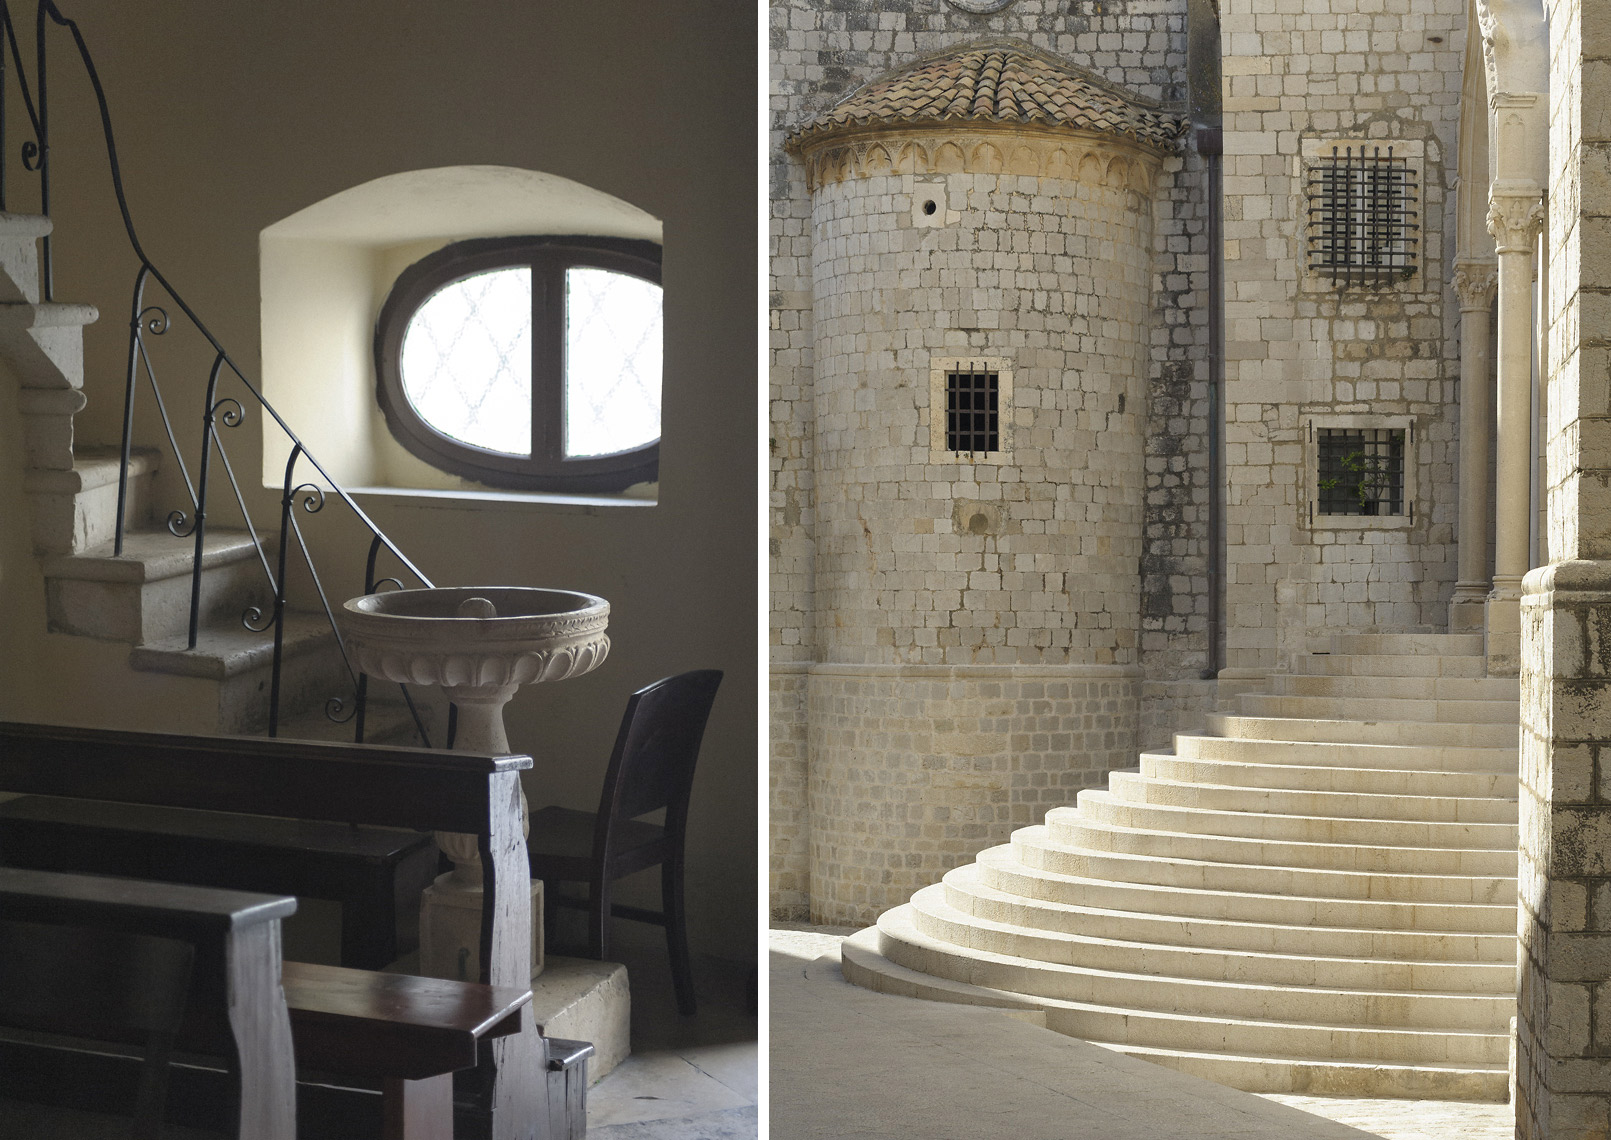 Korcula_church-font-and-Dubrovnik-stair-cascade-combo